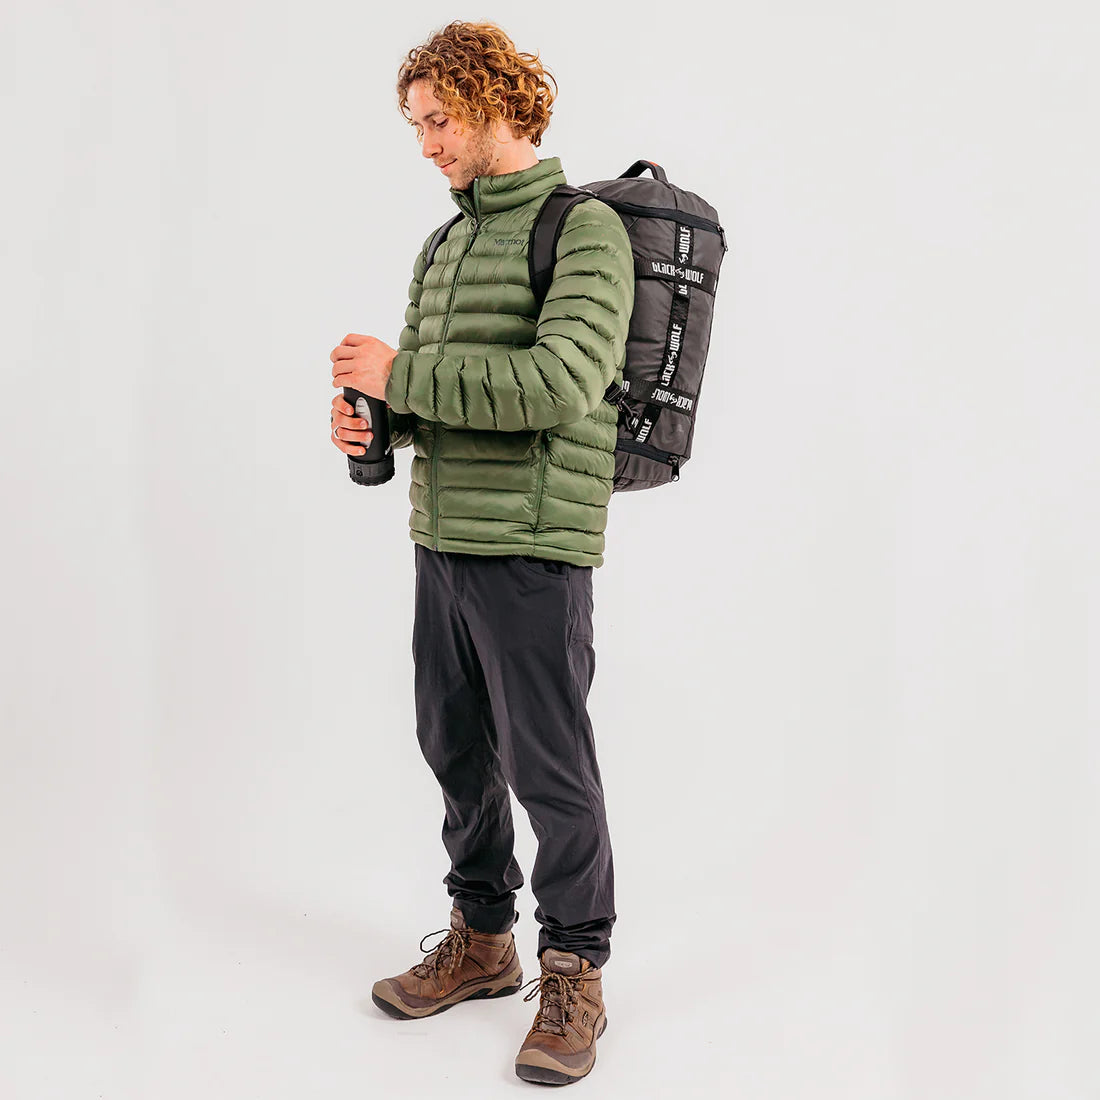 BlackWolf Adventure Pro Duffle Bag - 60 Litres